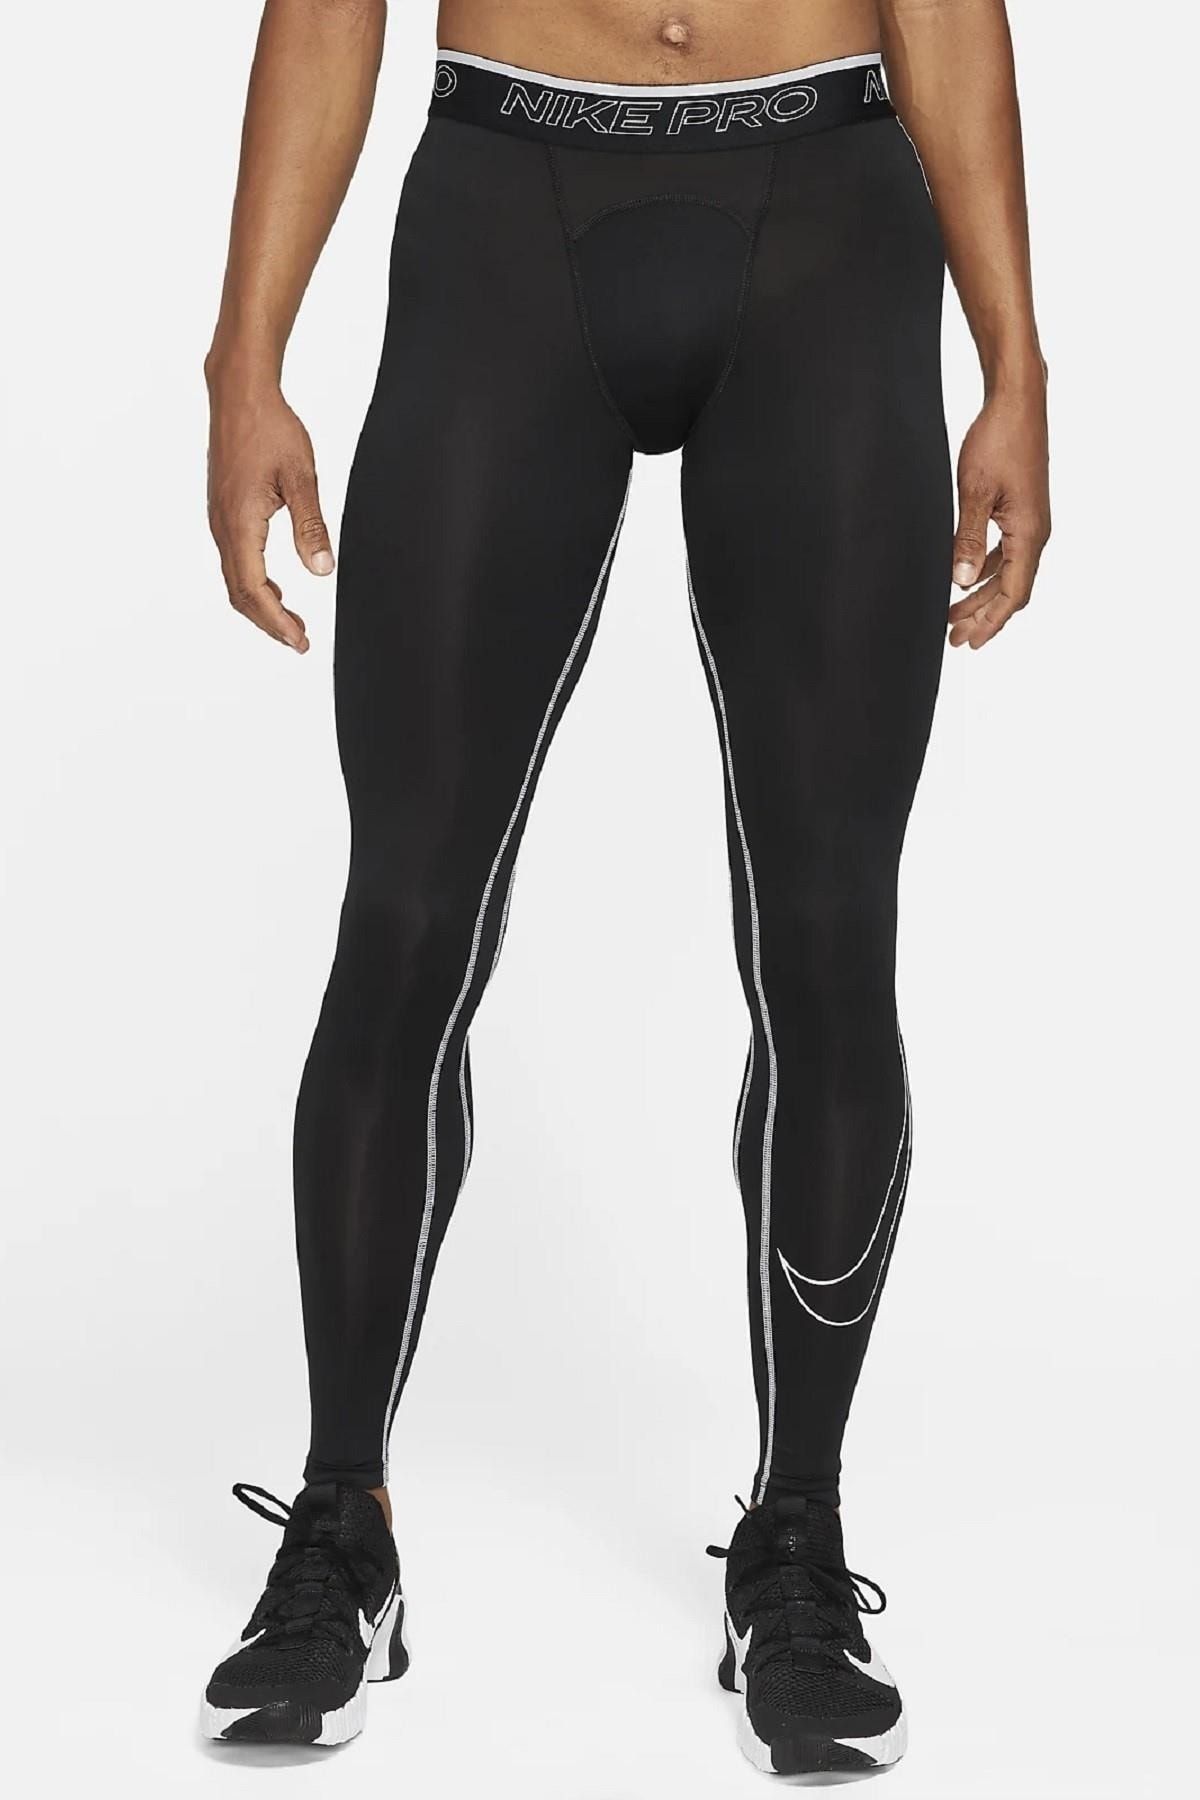 Nike Pro Men's Leggins Tights Dri-fit Black Black Men's Tights Dd